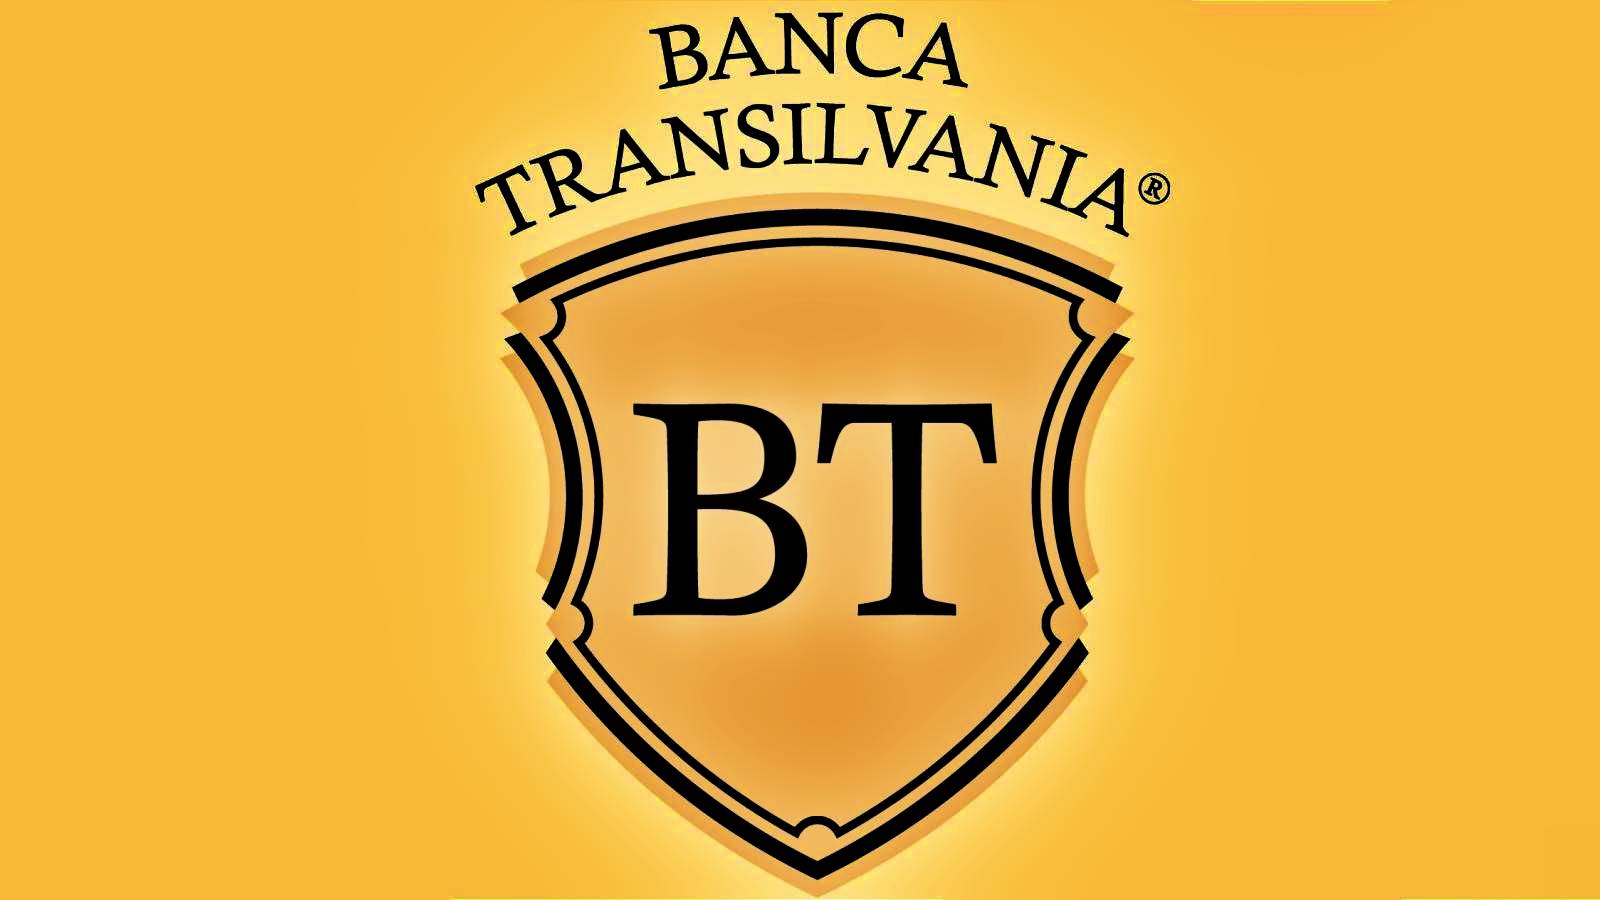 BANCA Transilvania Customers in Romania must be CAREFUL